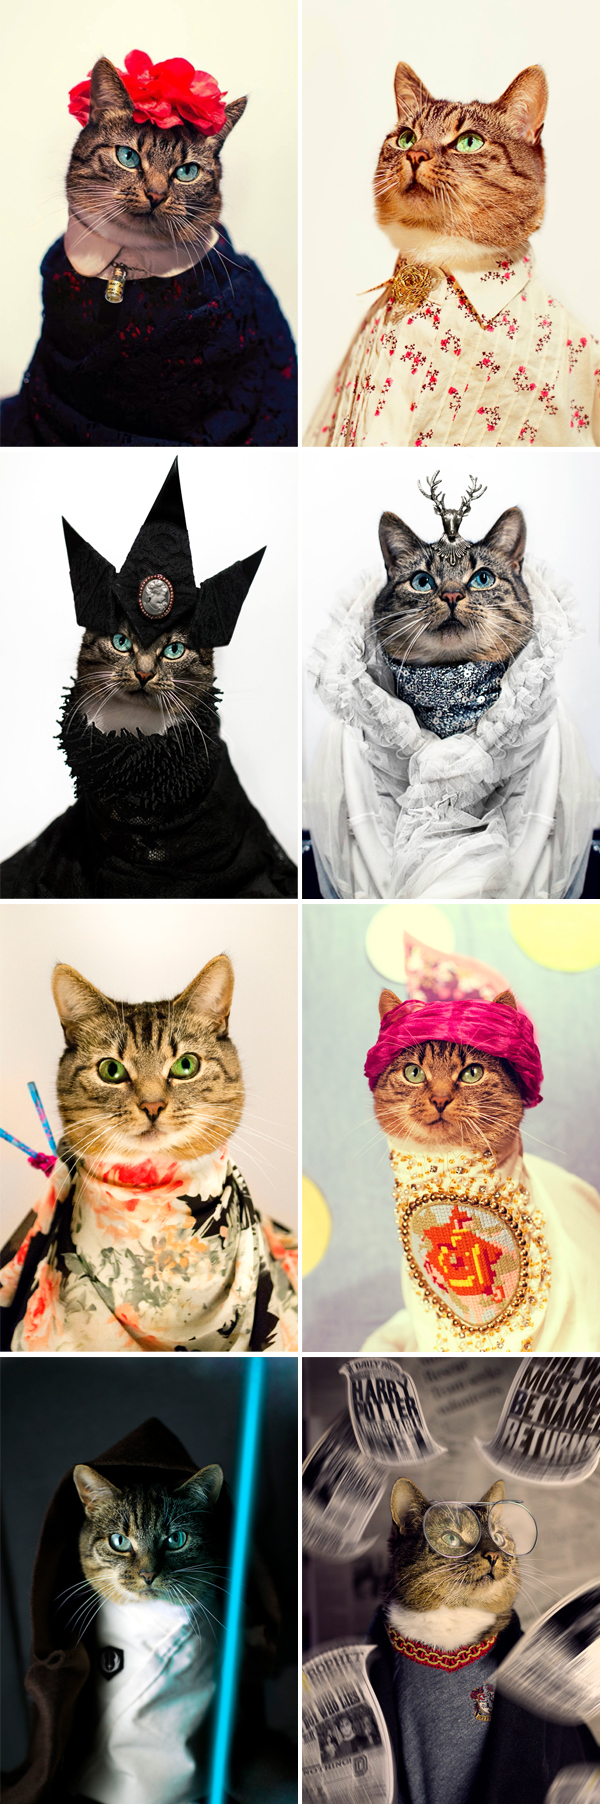 Os gatinhos do Jason McGroarty | Cat photography 